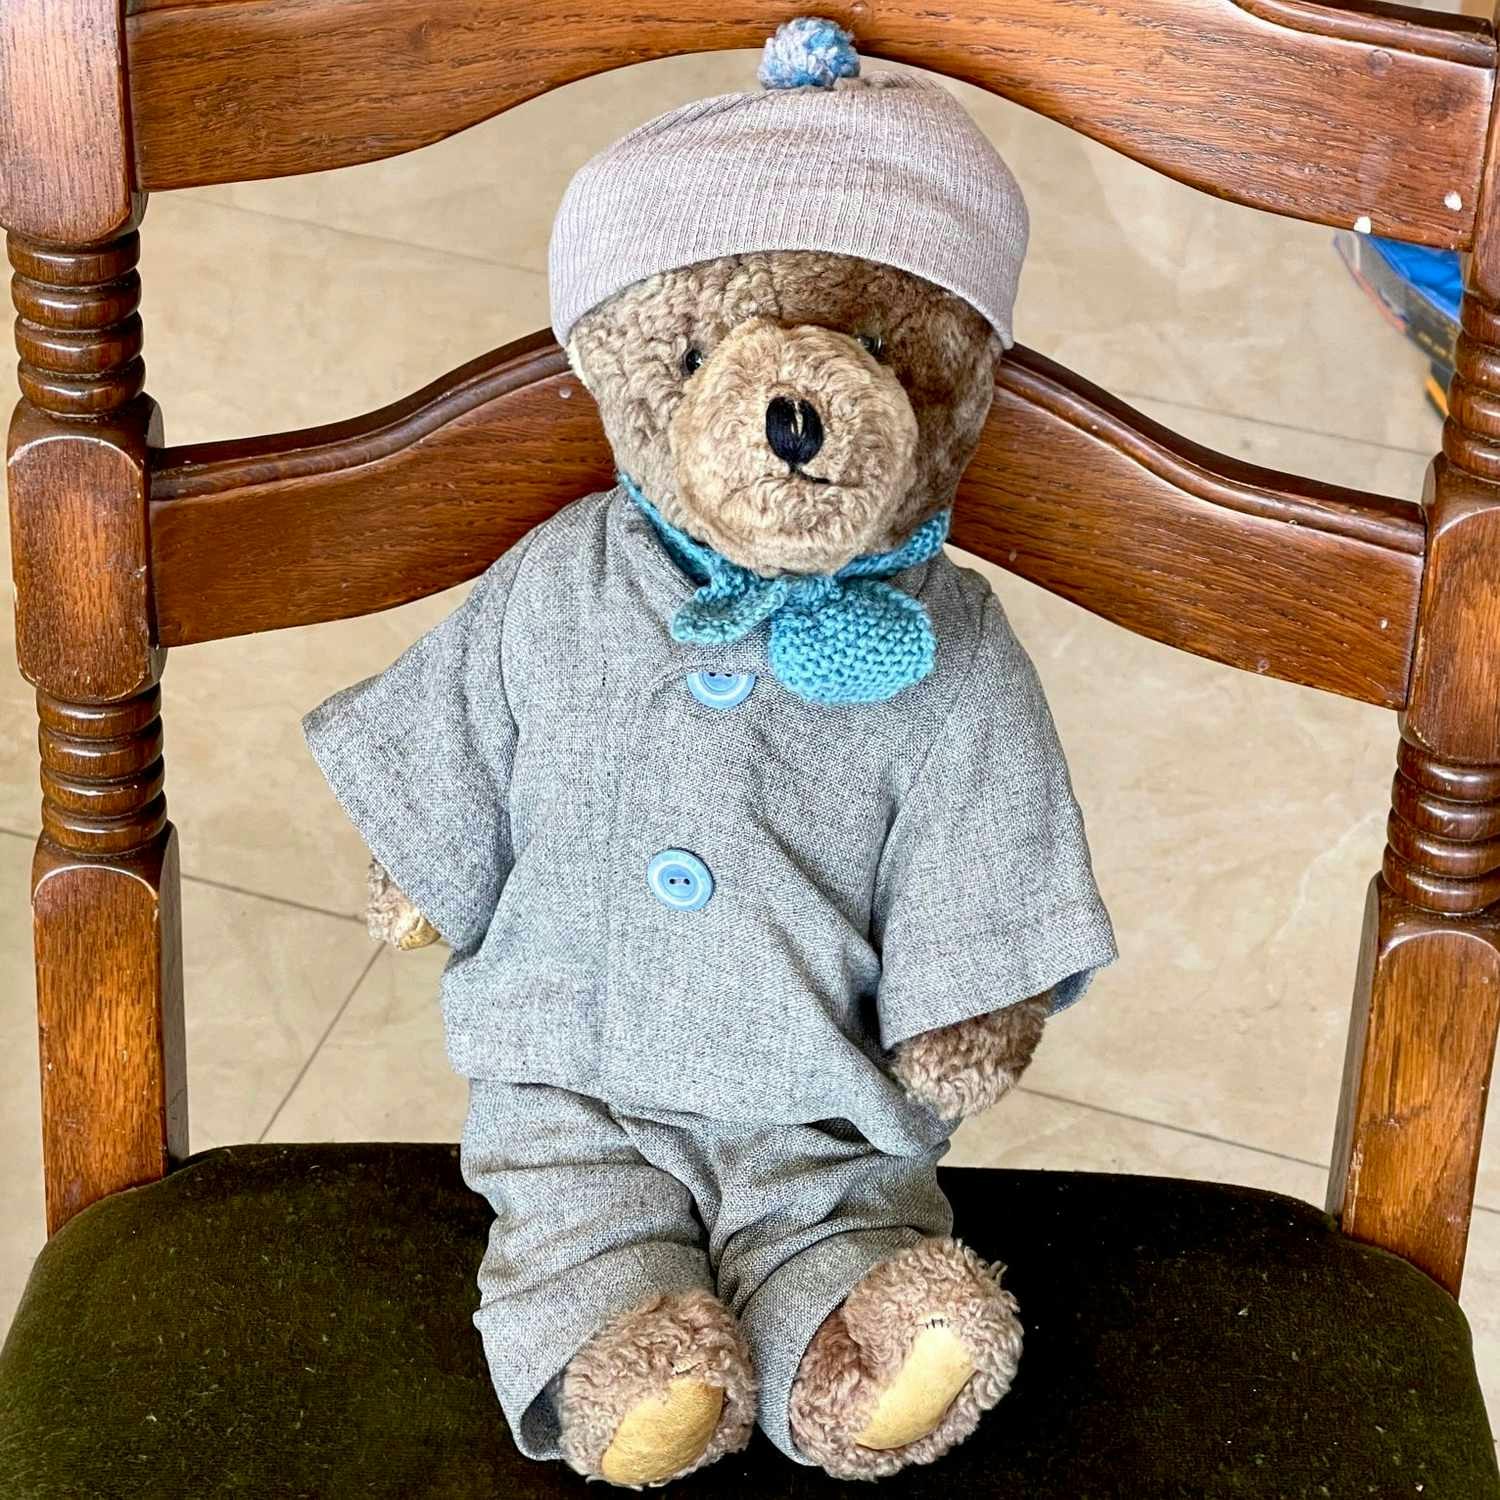 Antik nalle nallebjörn, Teddy teddybjörn